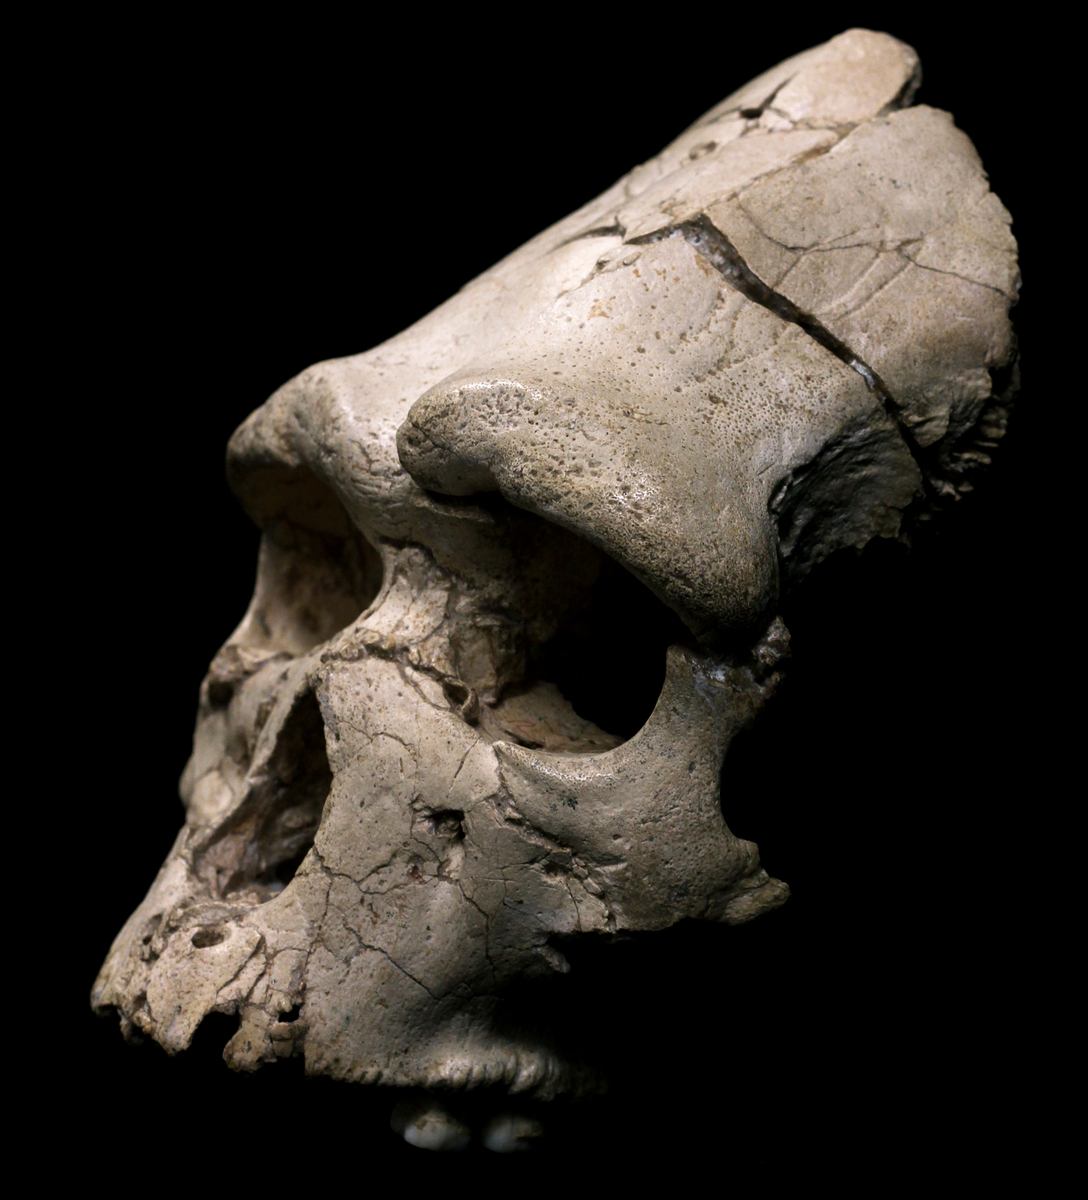 Crâne humain (Arago 21, 1971) : vue de profil. L'Homme de Tautavel.